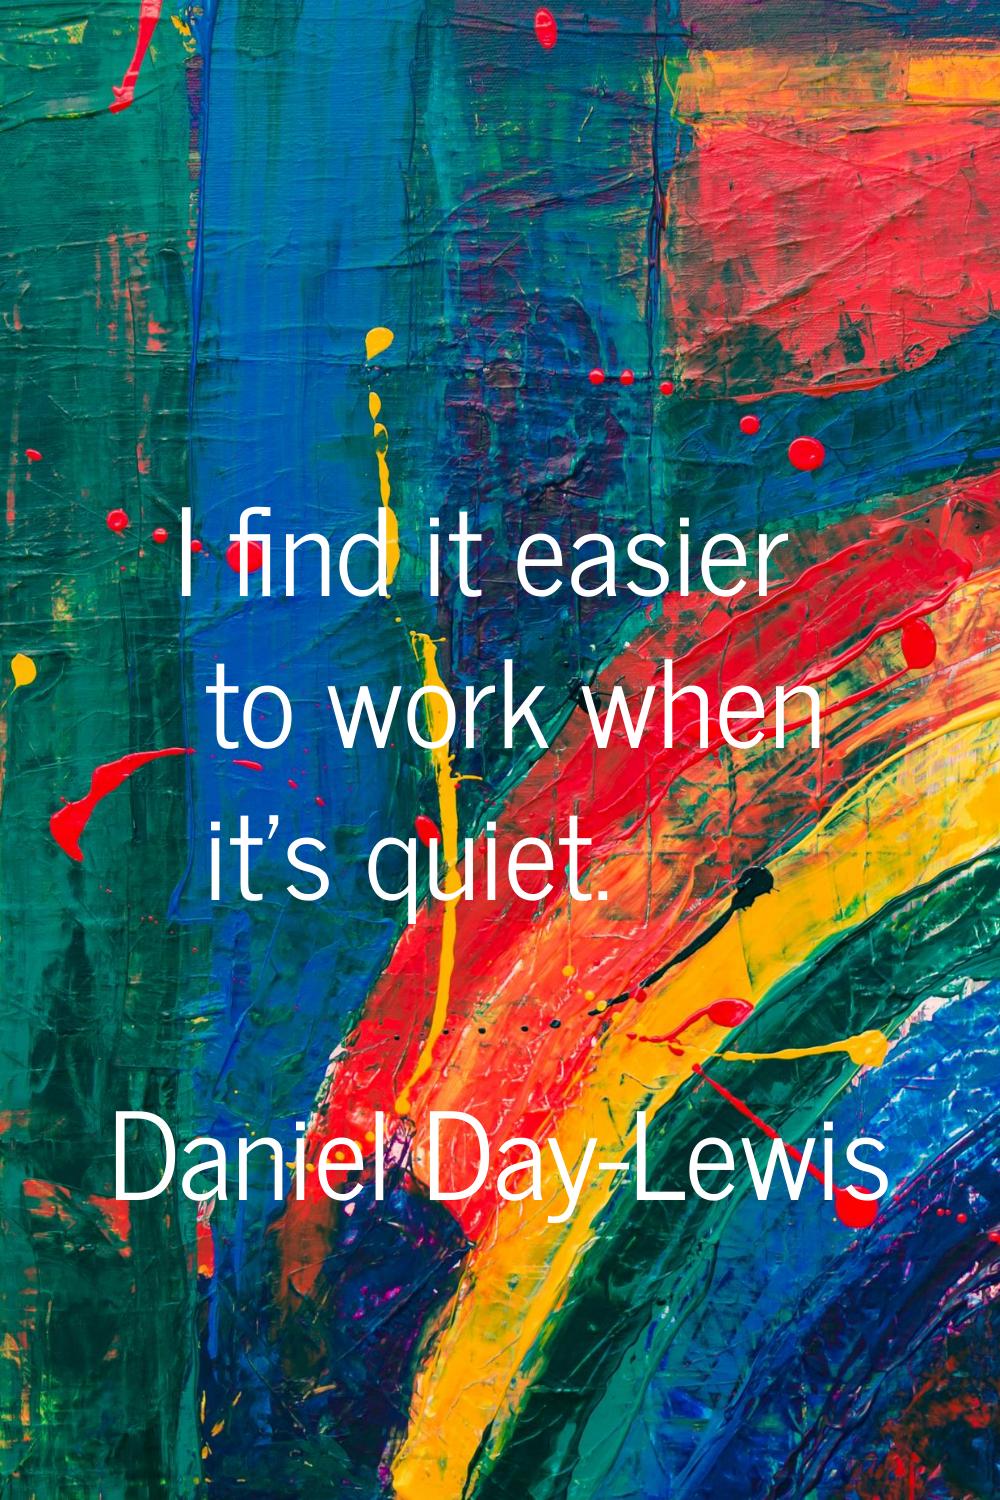 I find it easier to work when it's quiet.